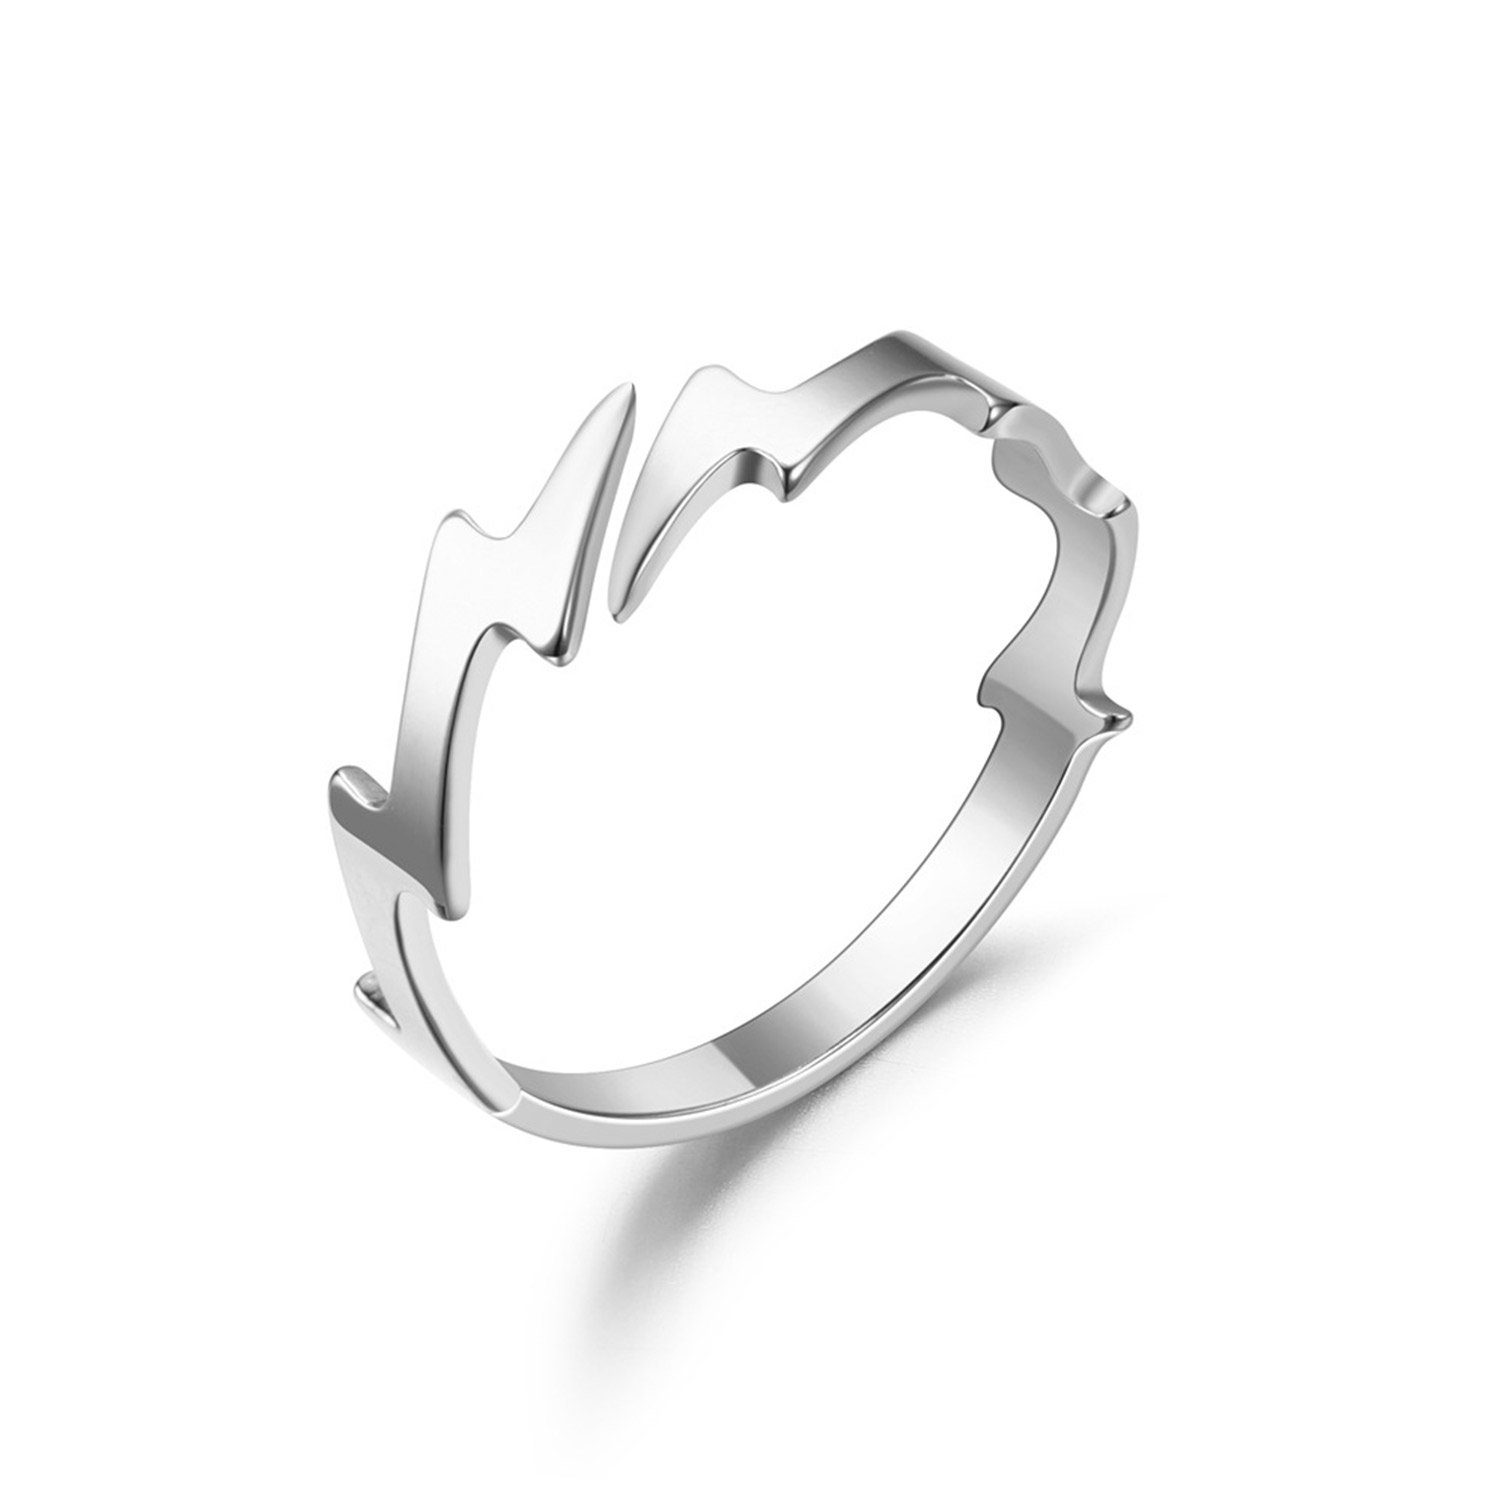 Förderungsberechtigung MAGICSHE Fingerring Blitz Titan verstellbar Ring Silber Stahl offener